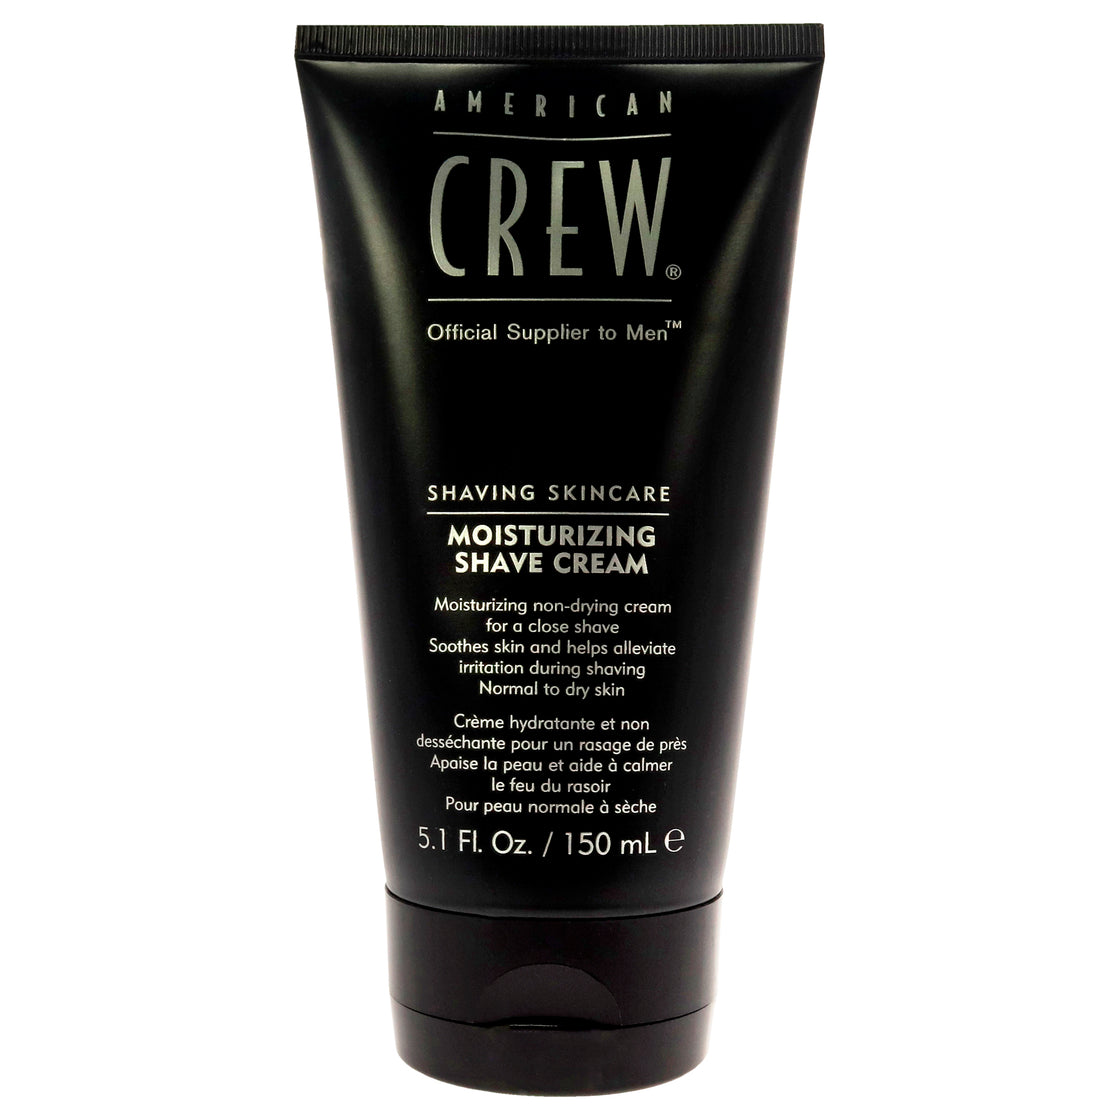 Moisturizing Shave Cream by American Crew for Men - 5.1 oz Shave Cream